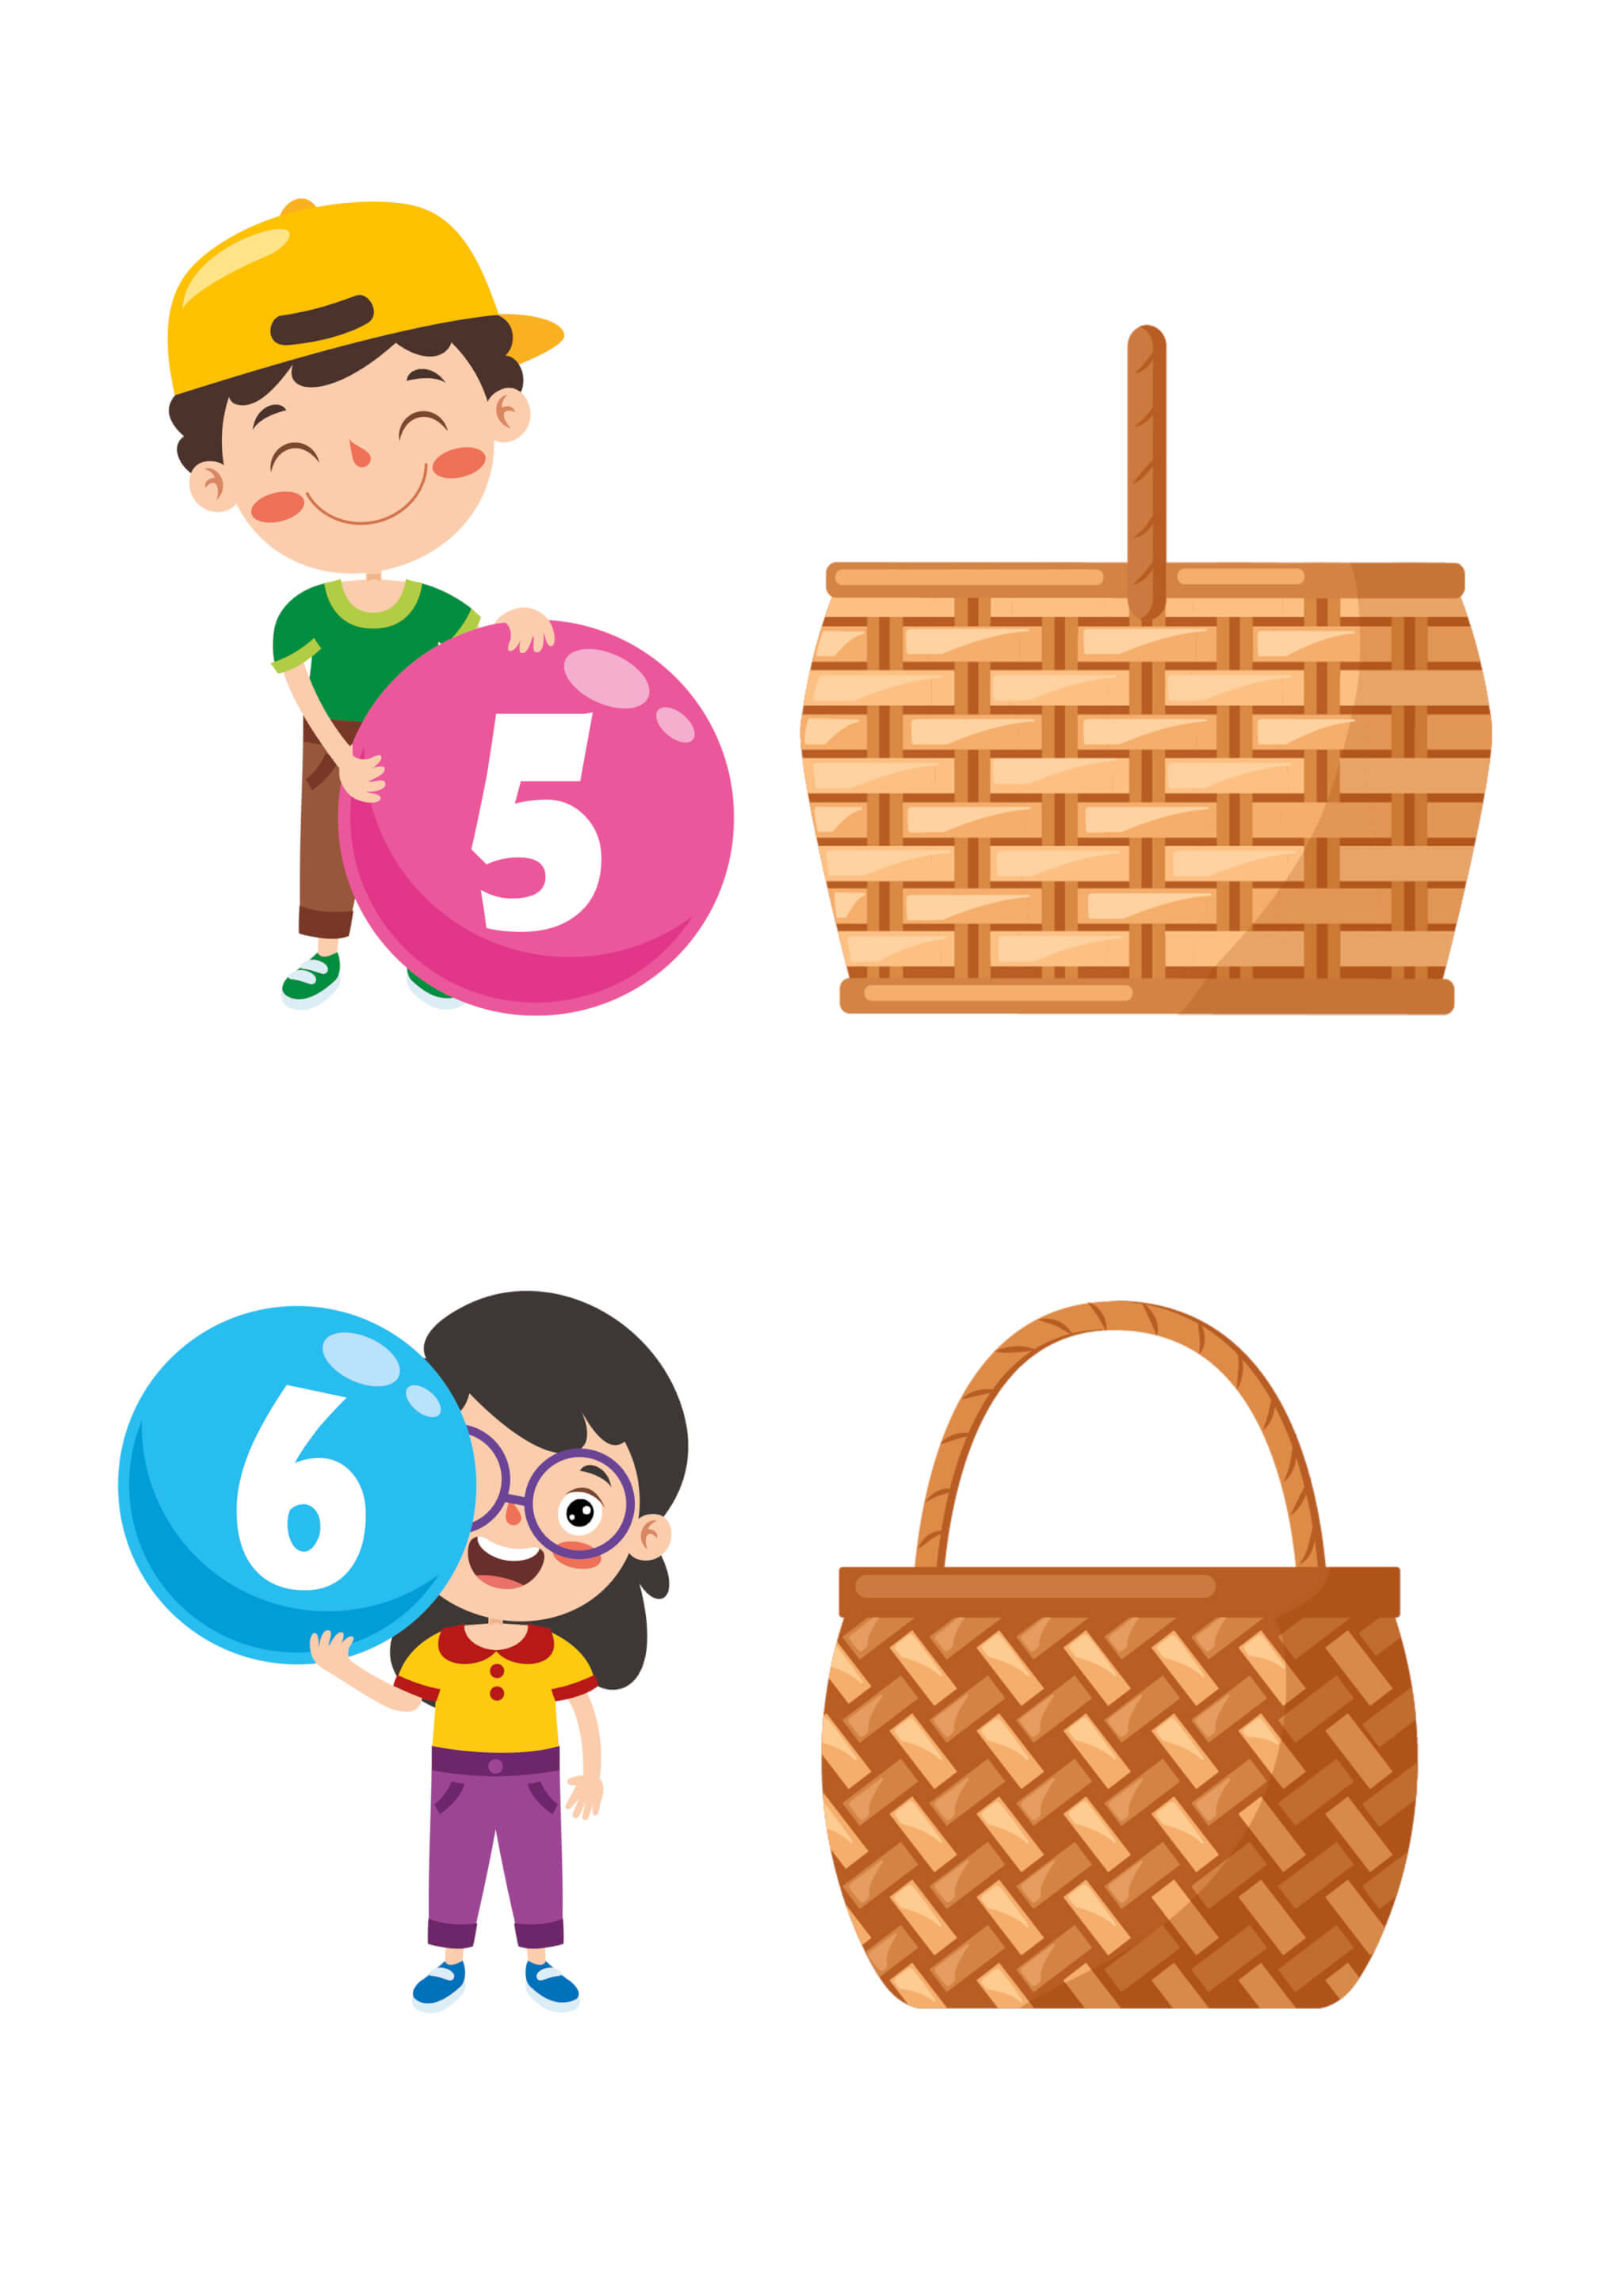 Baskets Math Printable for Counting - Image 4